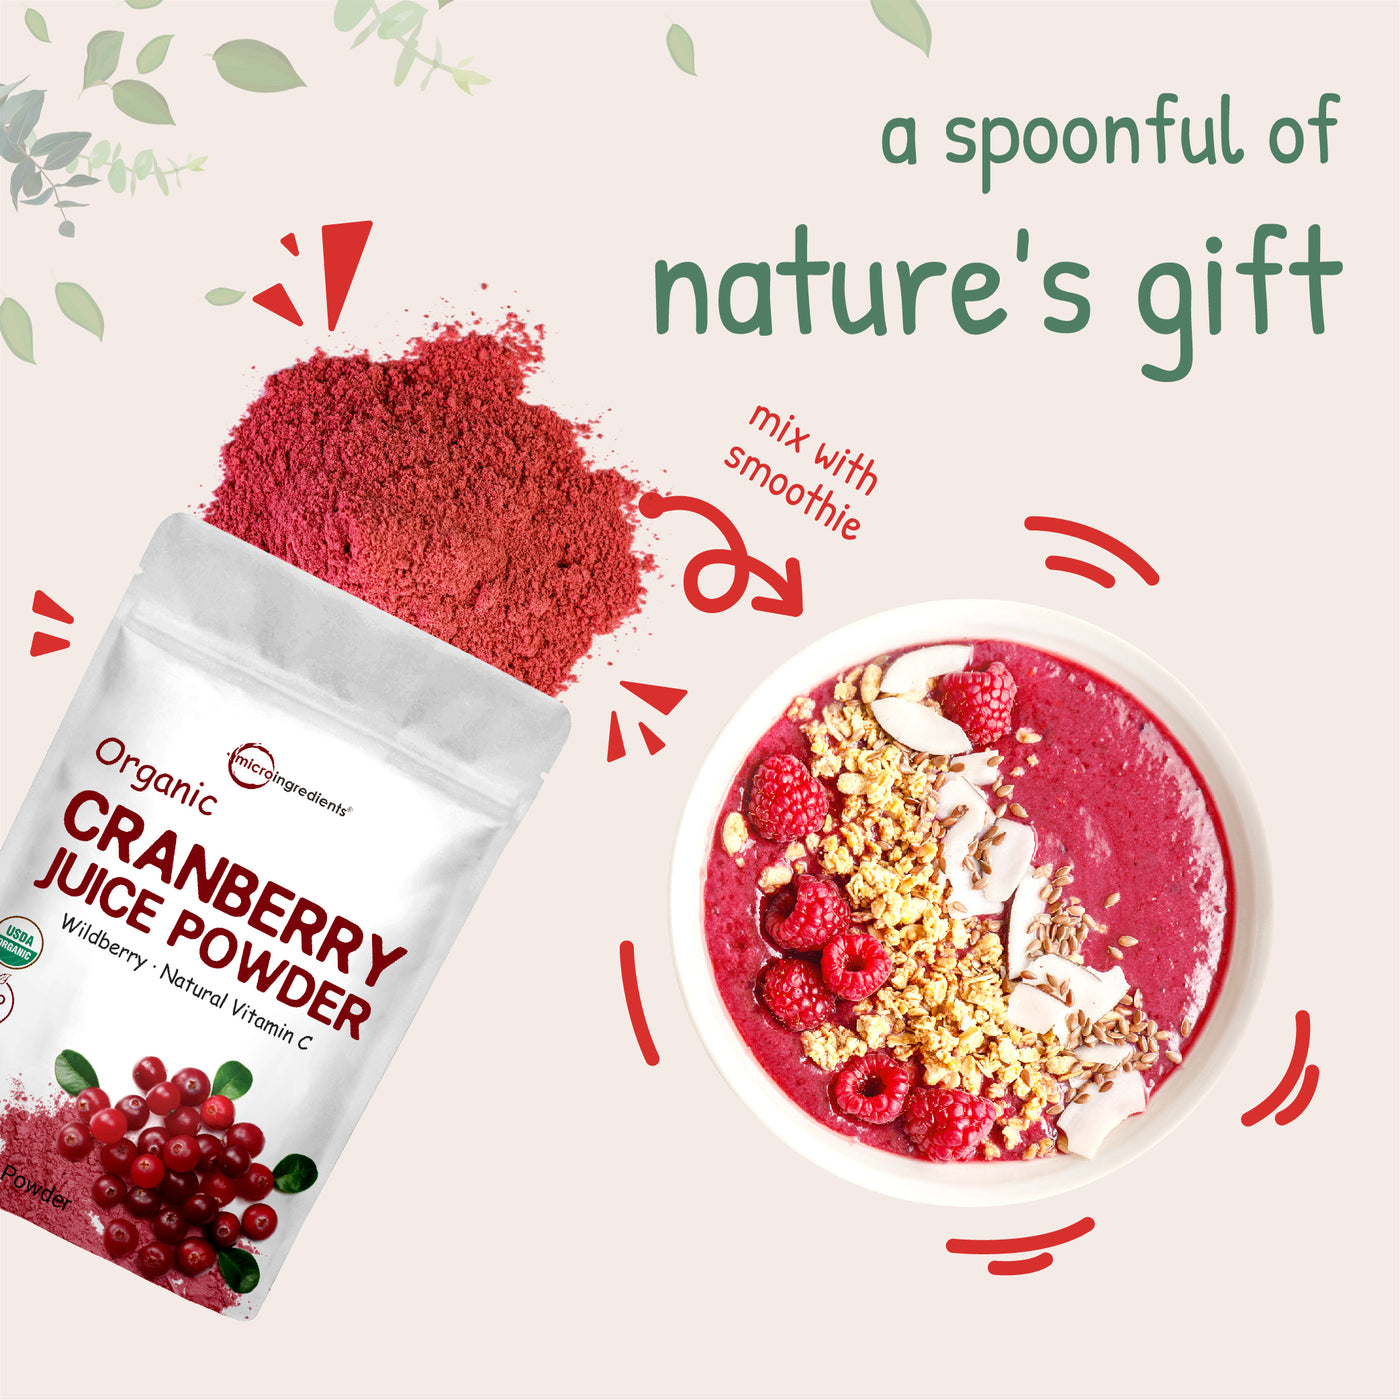 Organic Cranberry Juice Powder Nature's gift